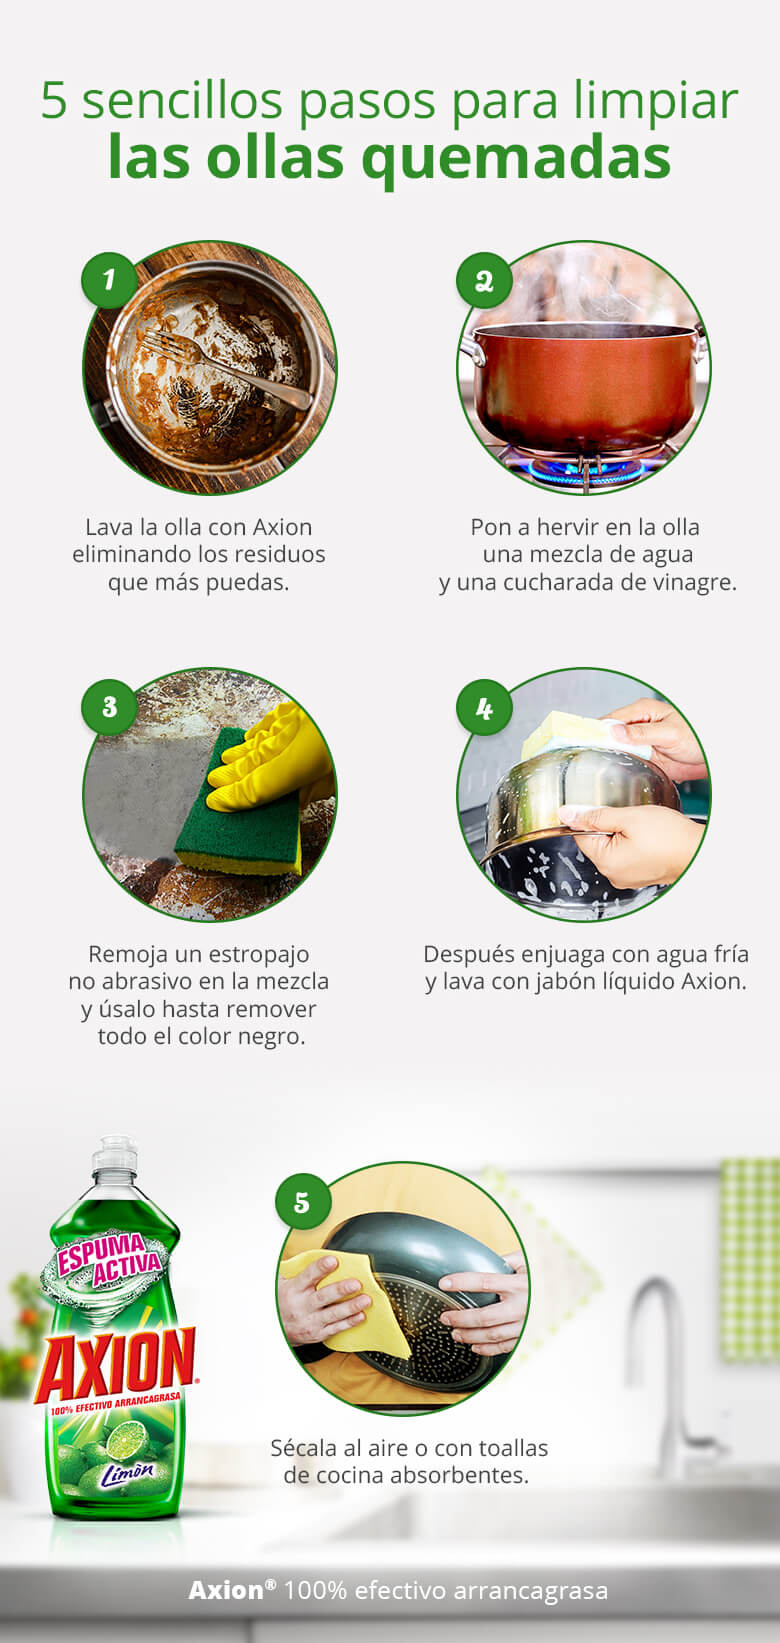 cinco pasos de como limpiar ollas quemadas